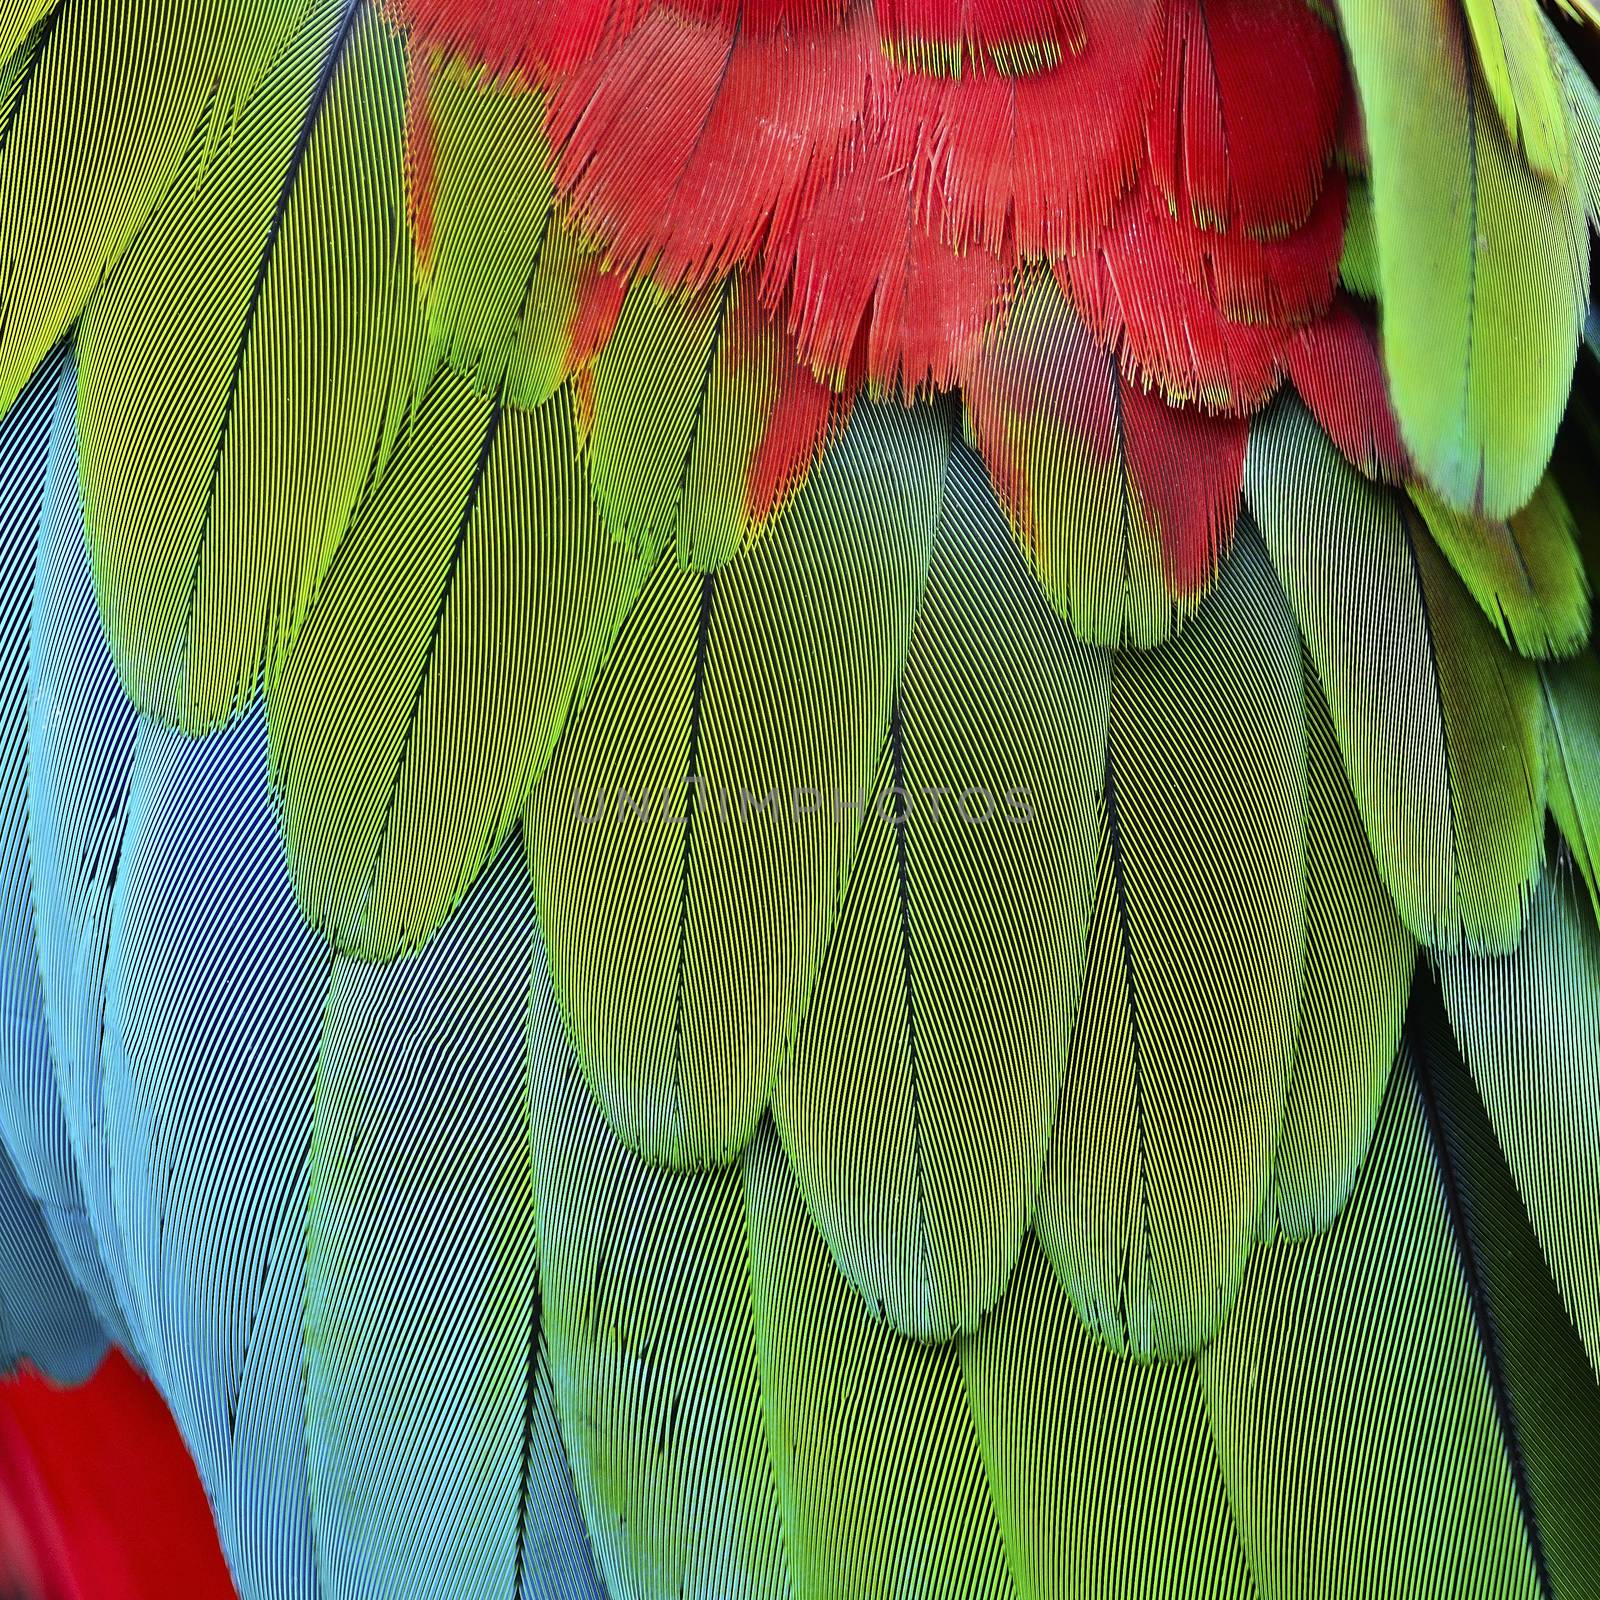 Greenwinged Macaw feathers by panuruangjan